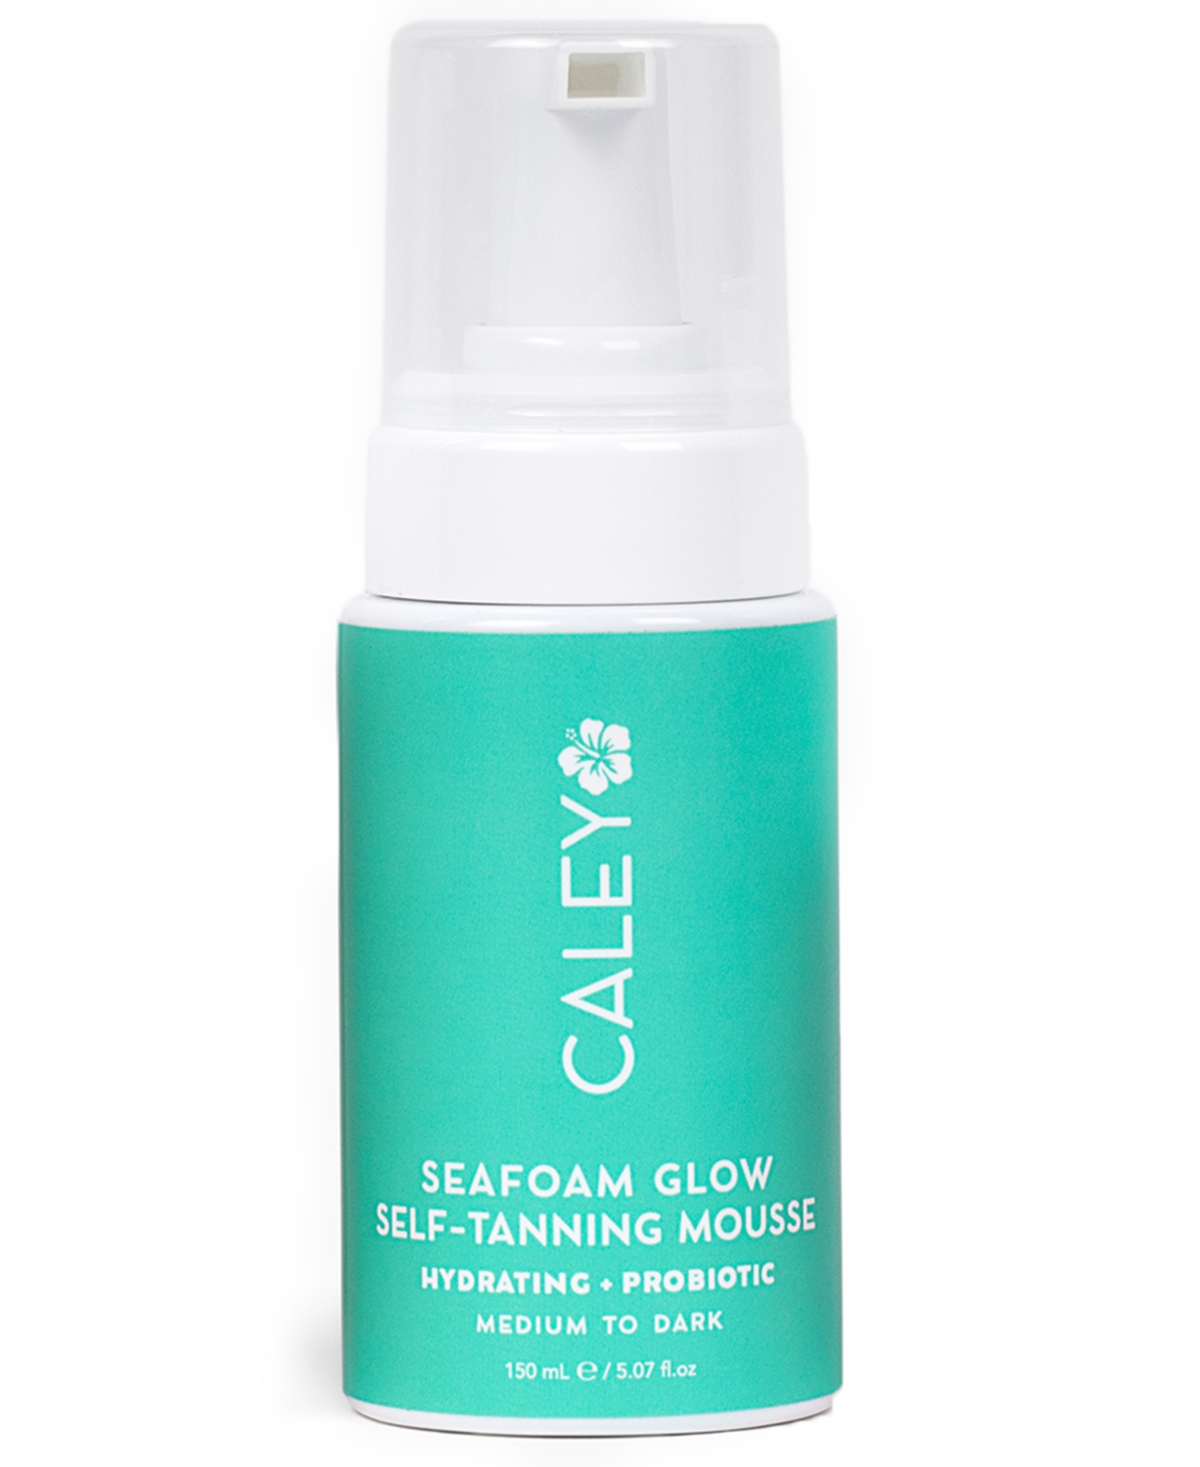 Caley Cosmetics Seafoam Glow Self-Tanning Mousse